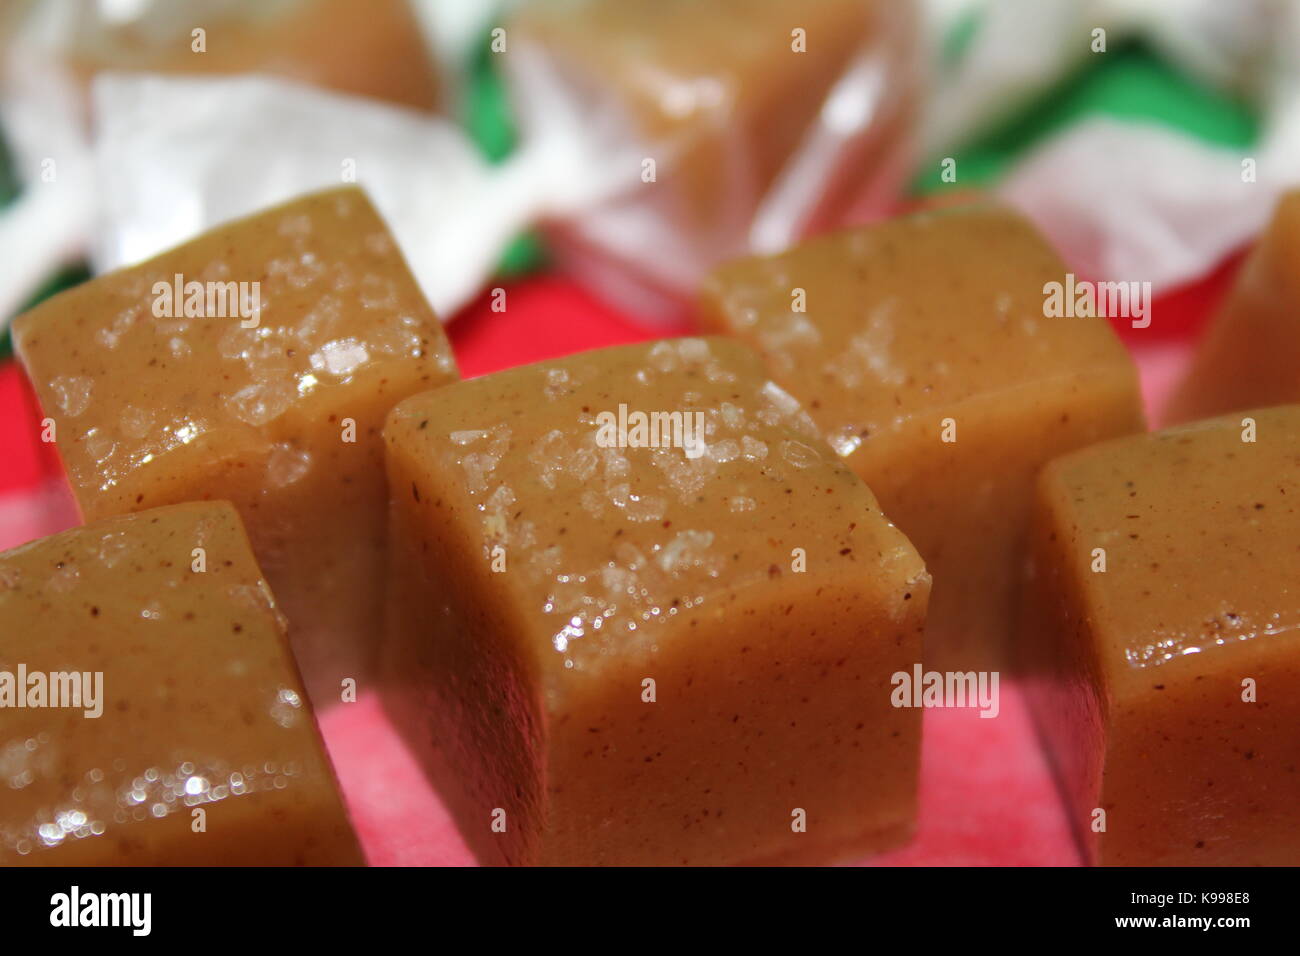 salted caramel Stock Photo